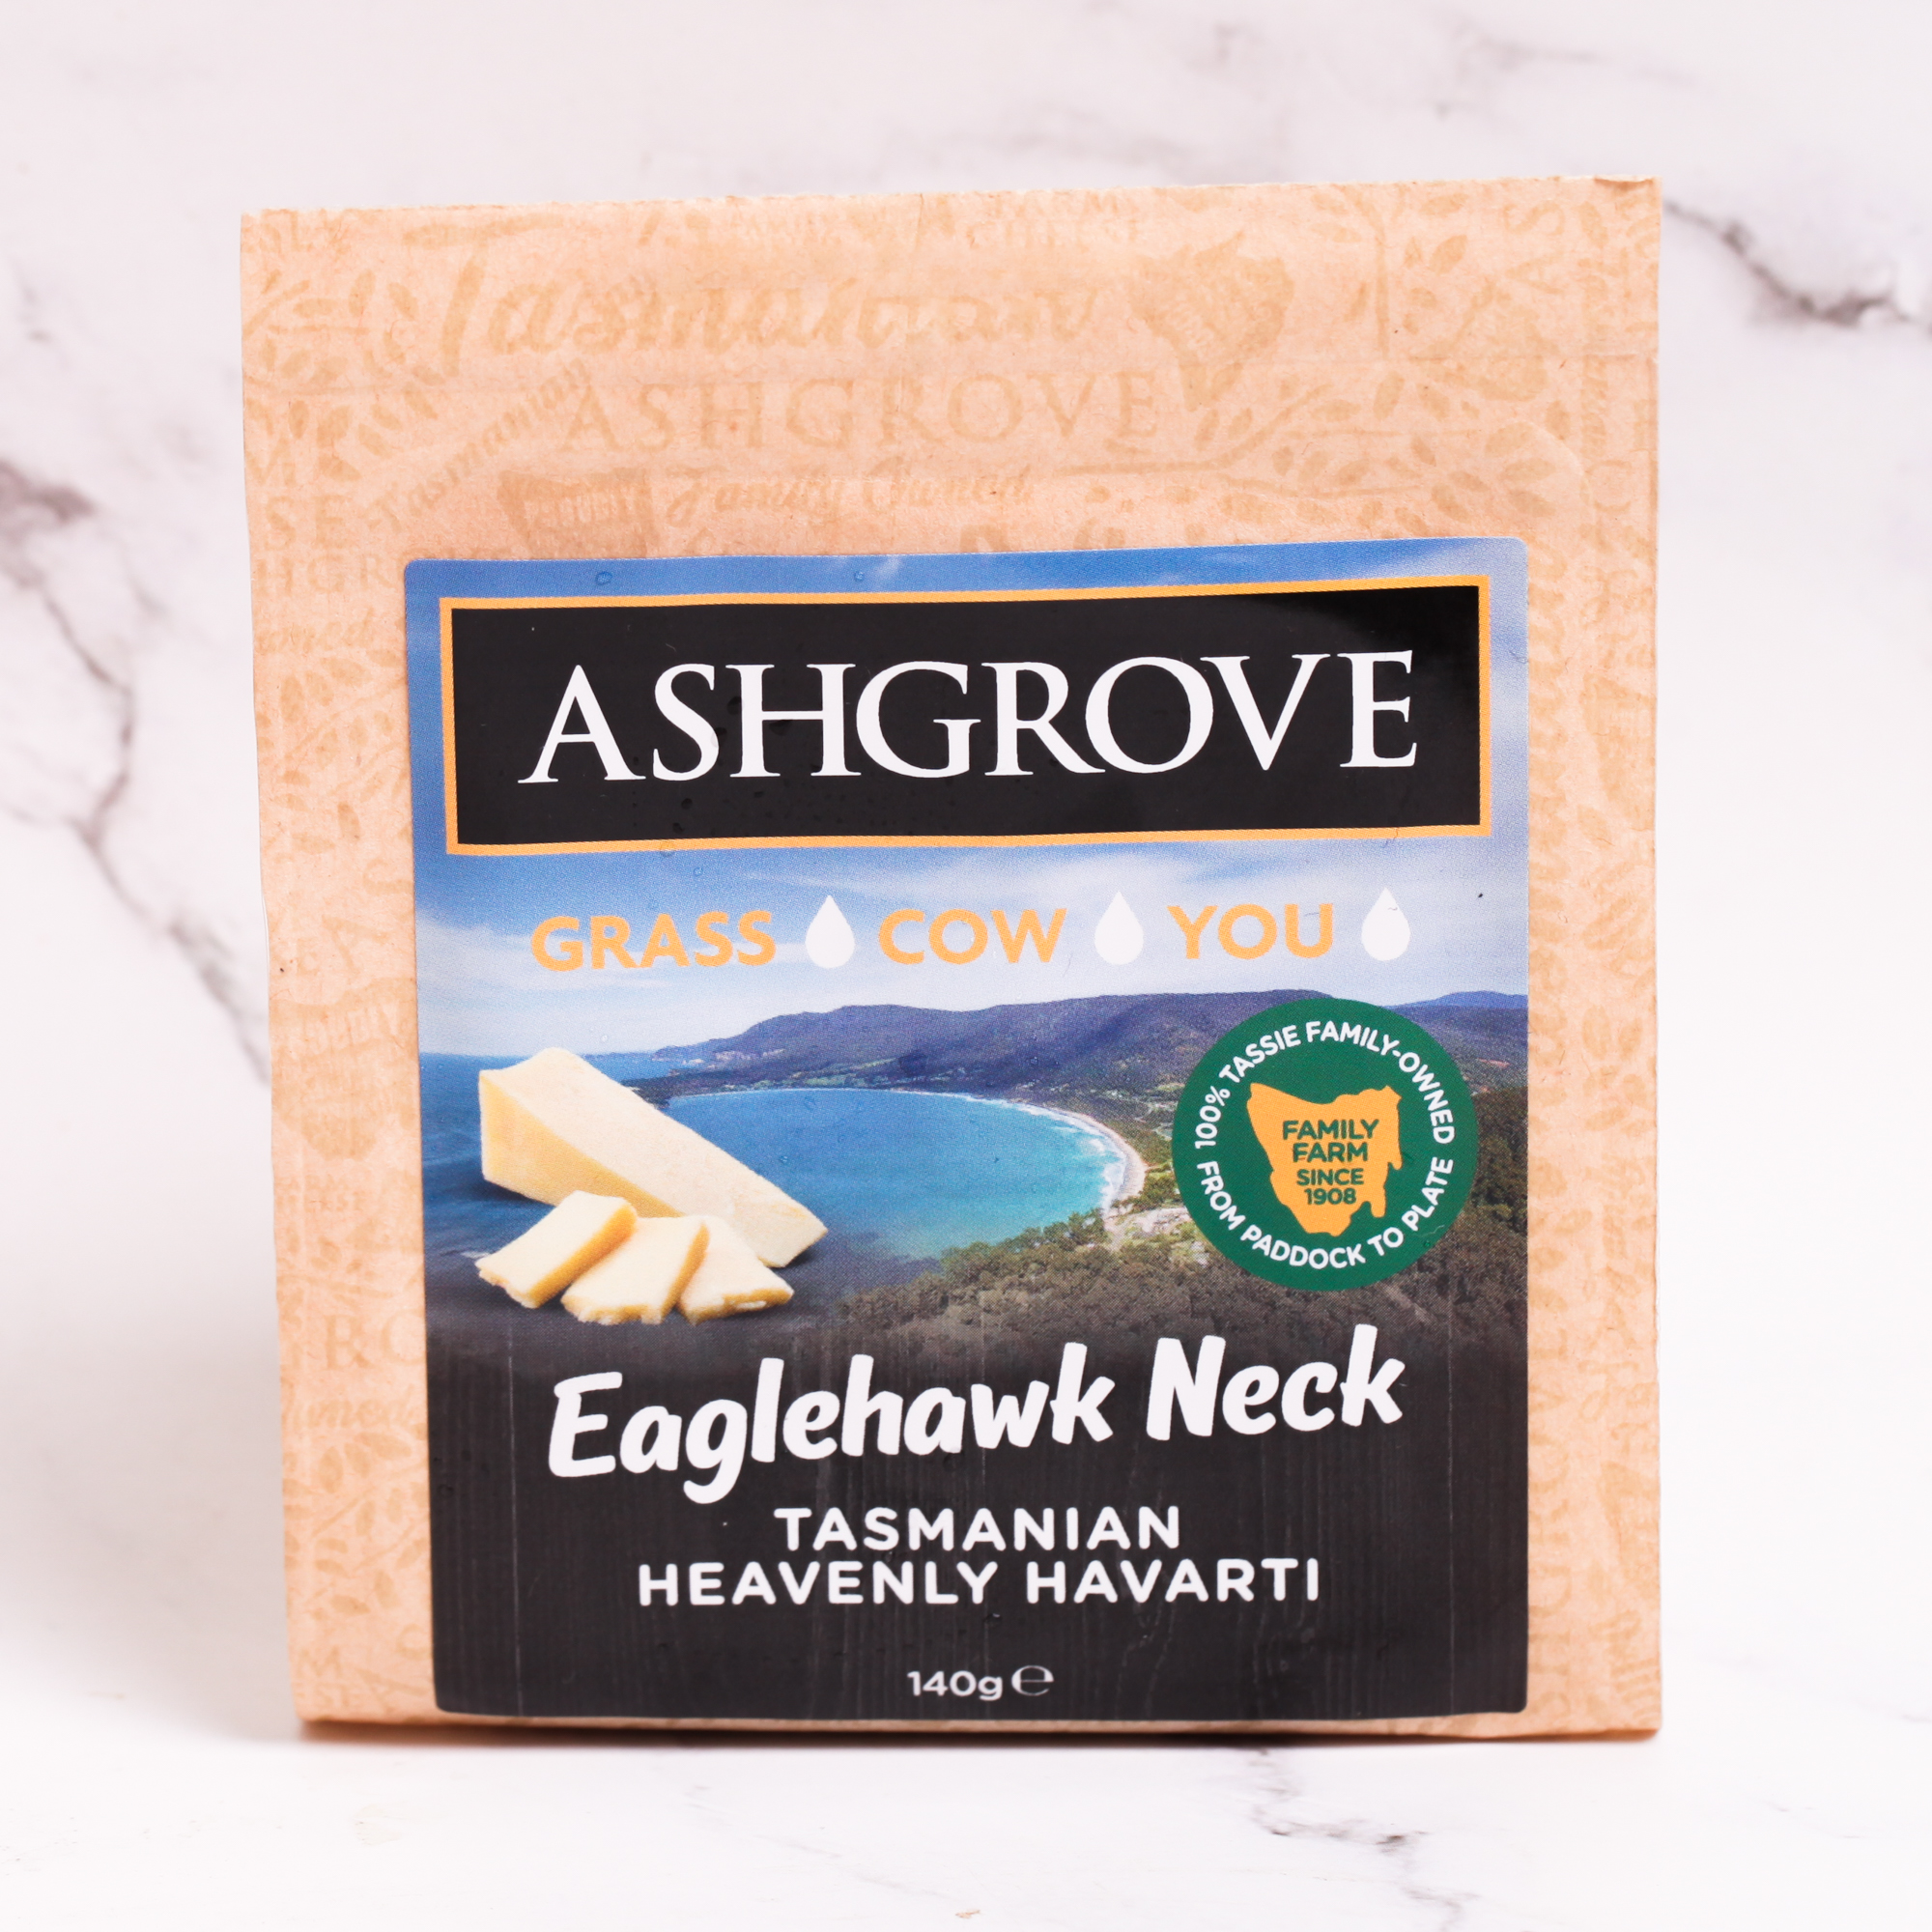 Ashgrove Eaglehawk Neck Tasmanian Heavenly Havarti